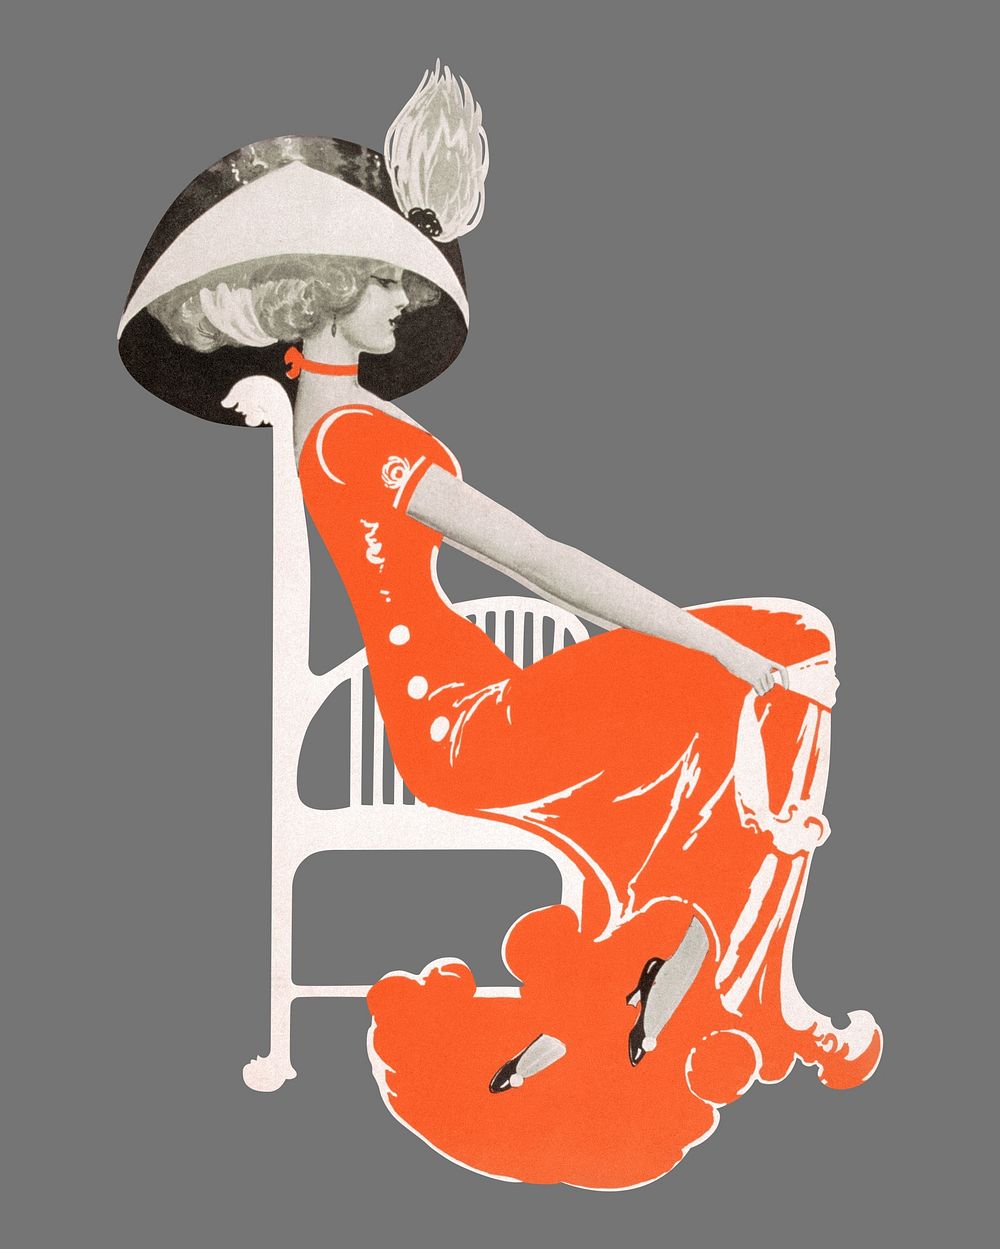 Vintage fashionable woman chromolithograph art illustration. Remixed by rawpixel. 